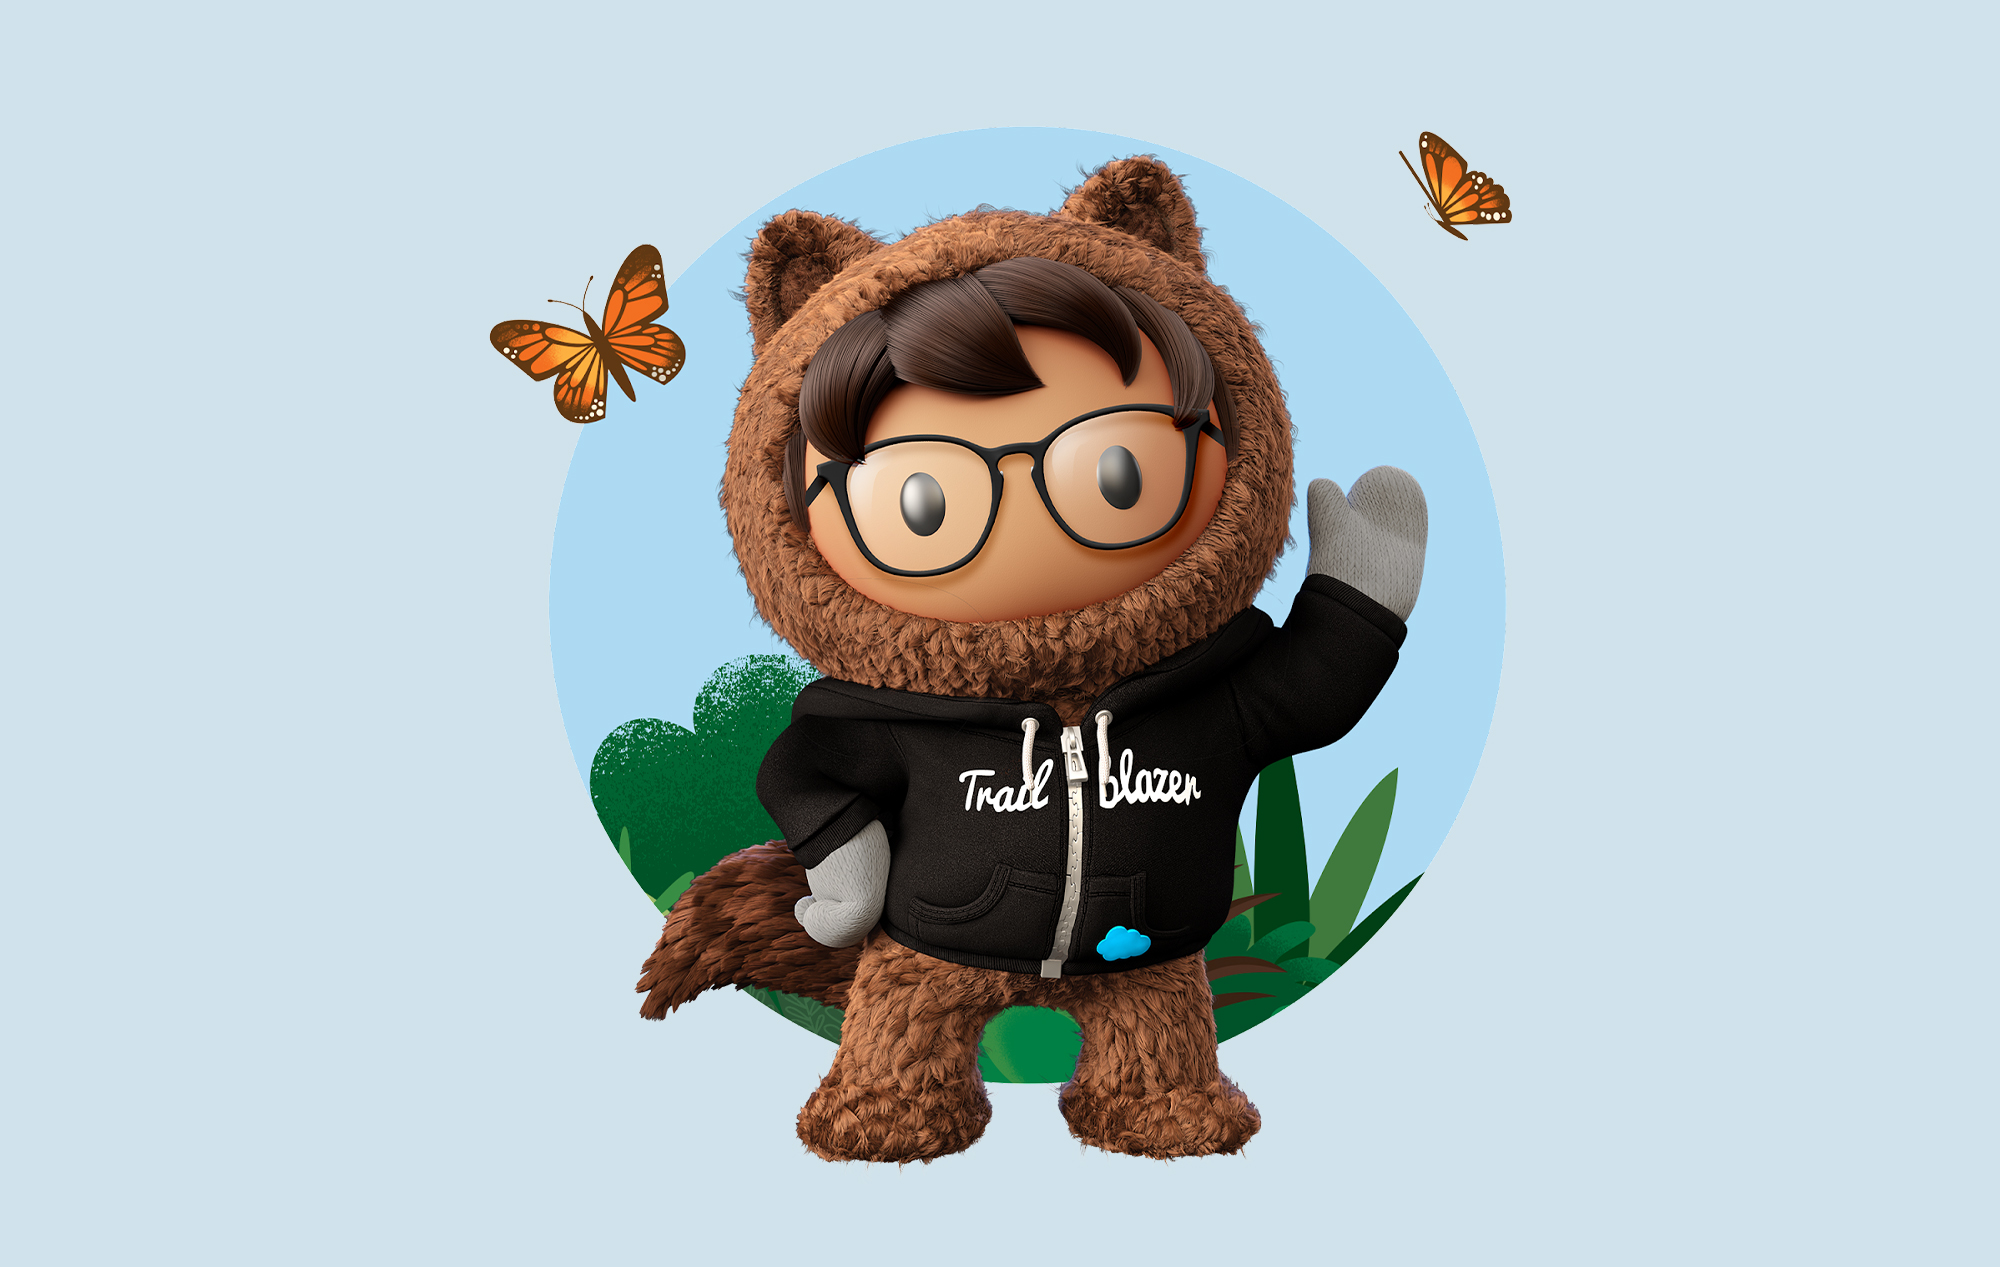 Illustration of Astro wearing glasses and a Salesforce Trailblazer sweatshirt, waving.